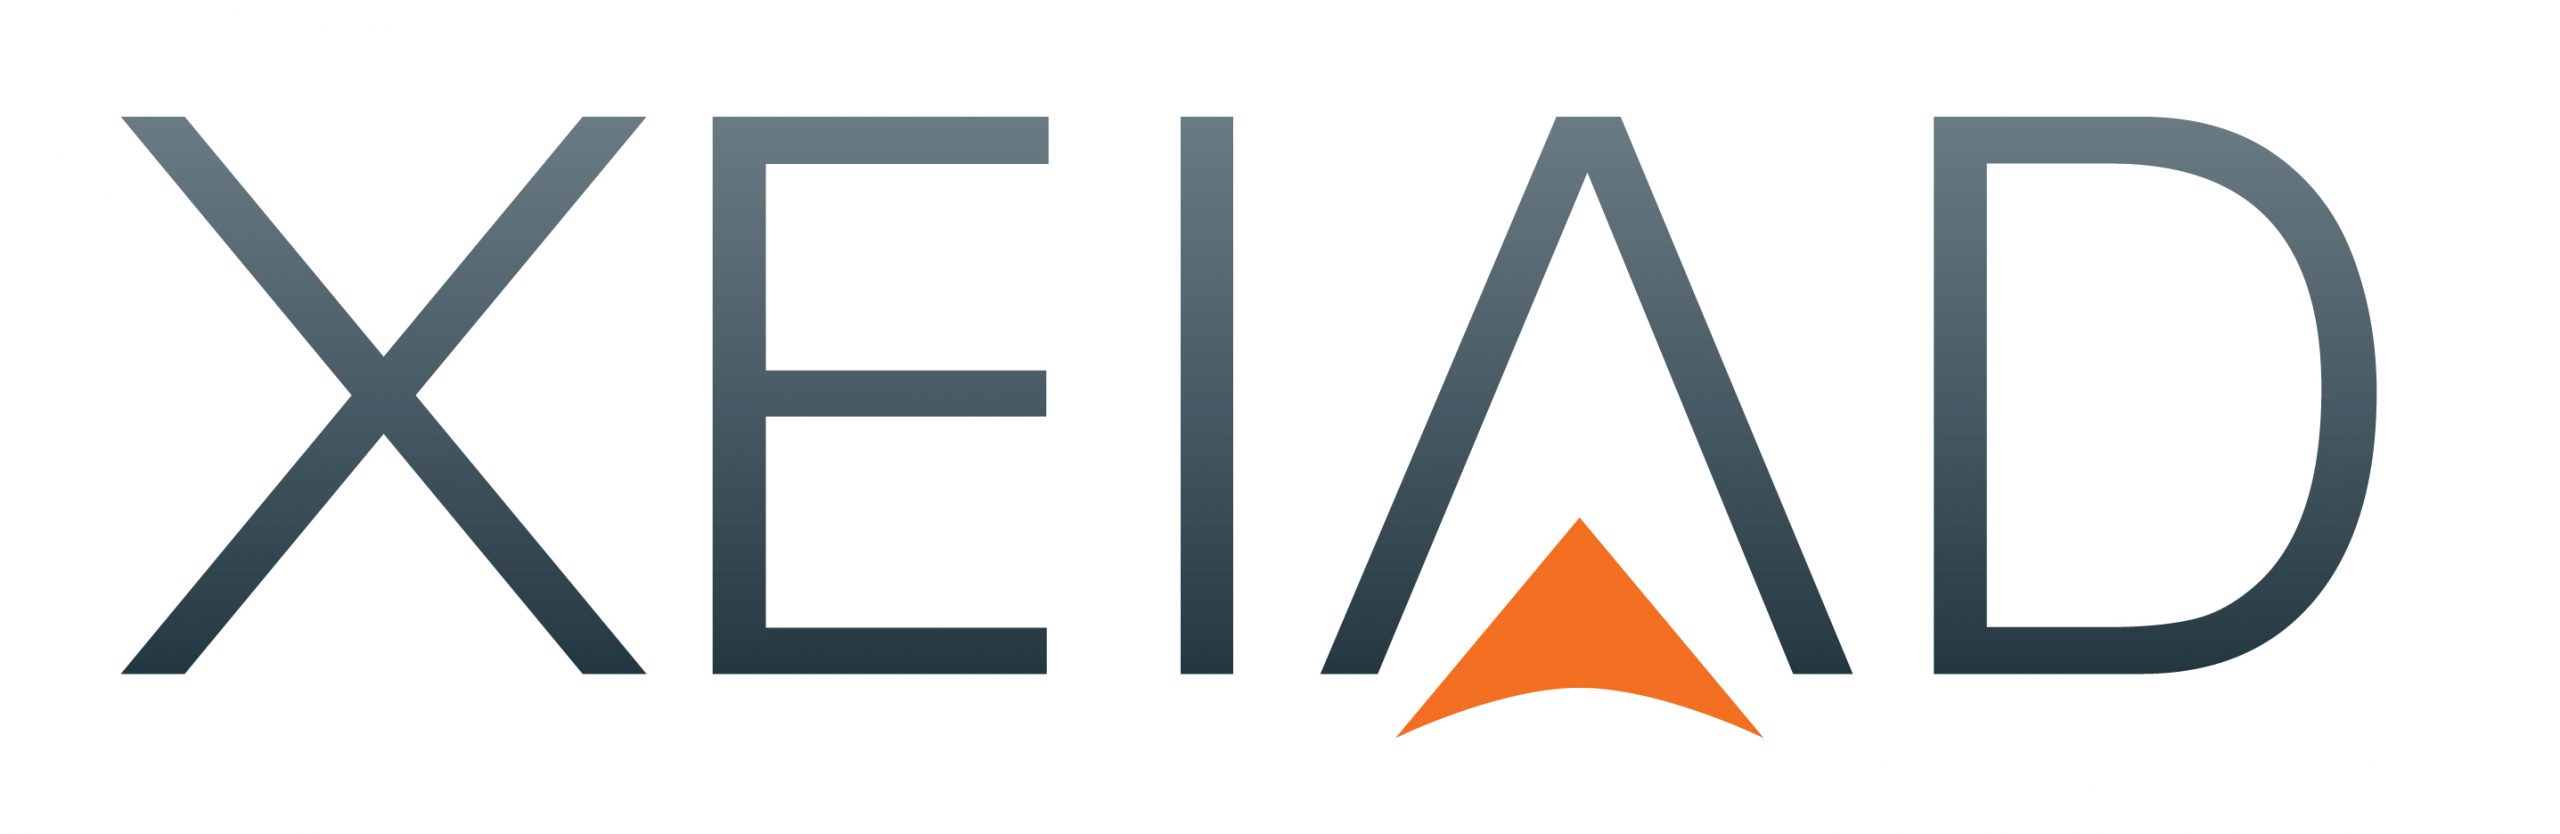 XEIAD_logo